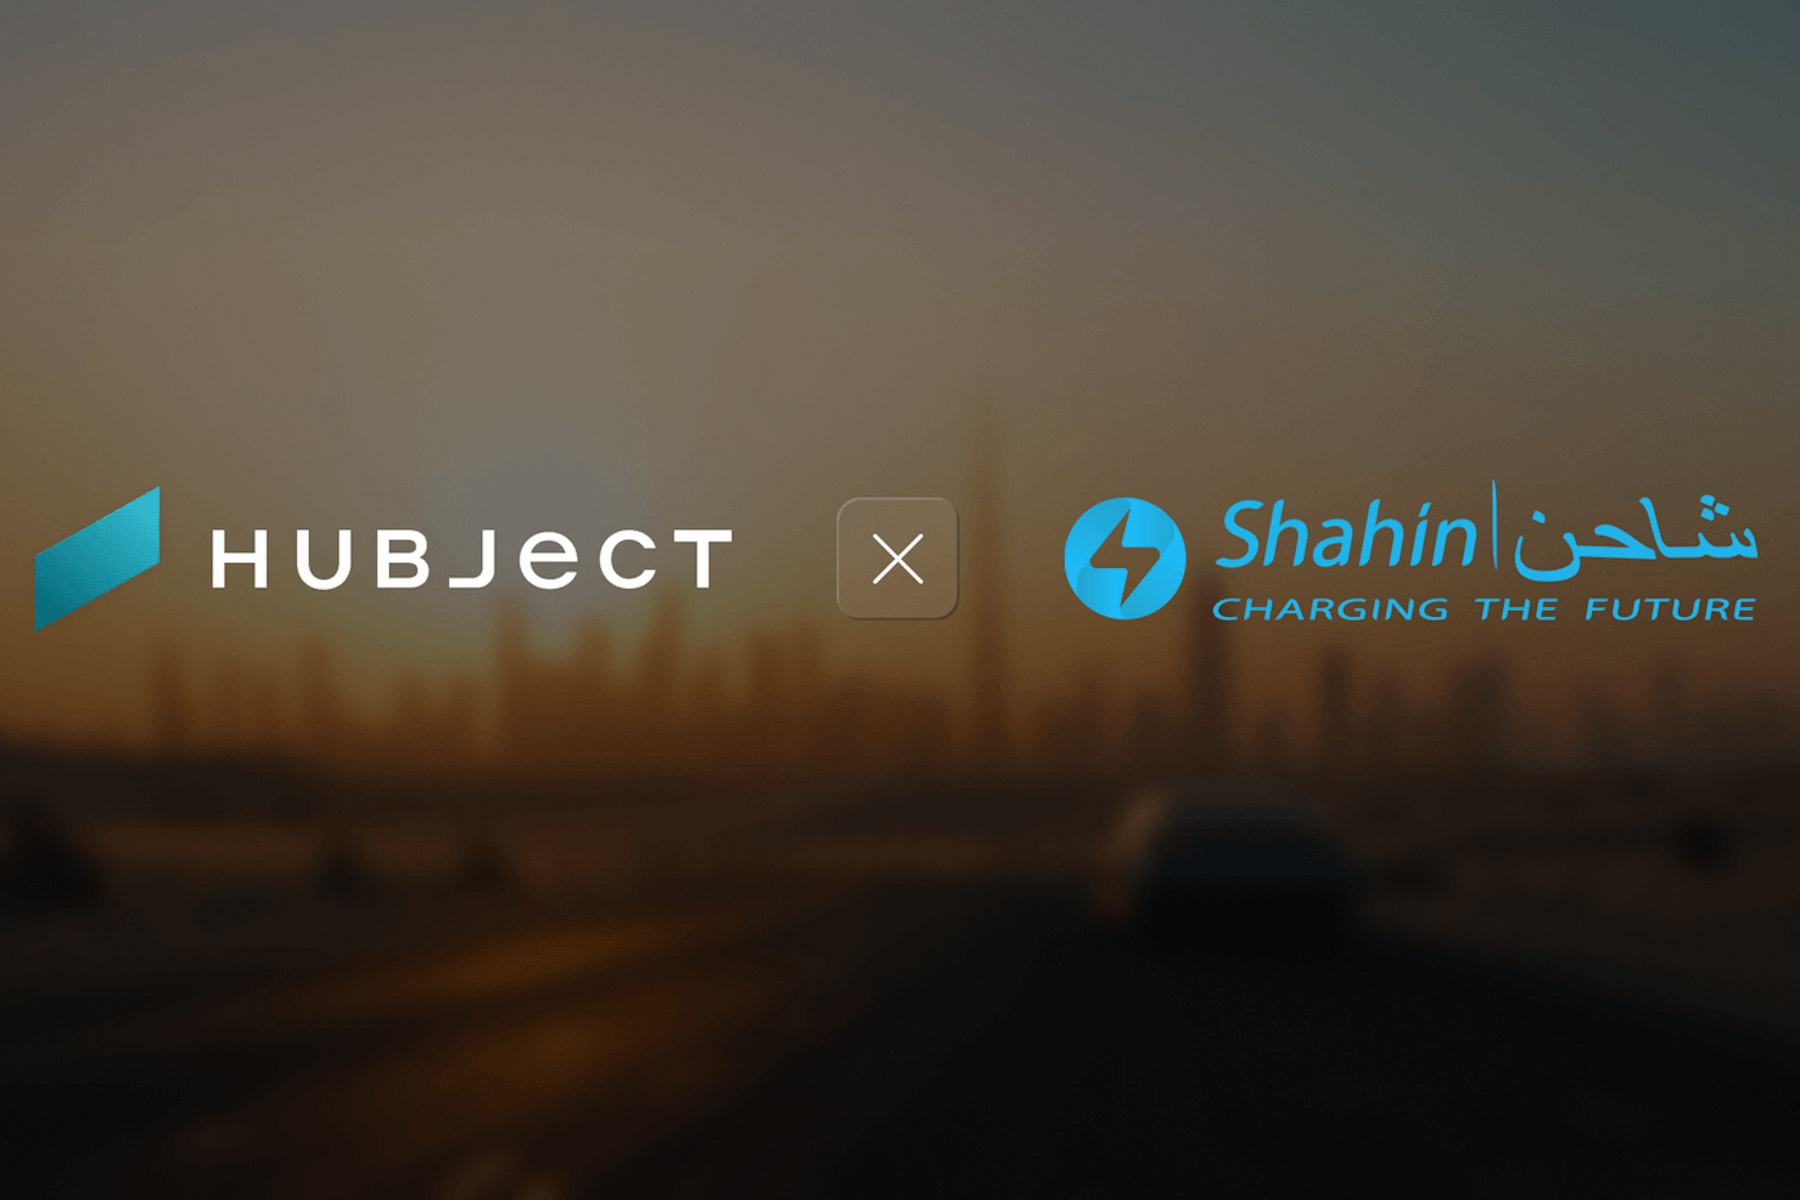 Hubject enters into roaming partnership with Shahin - electrive.com